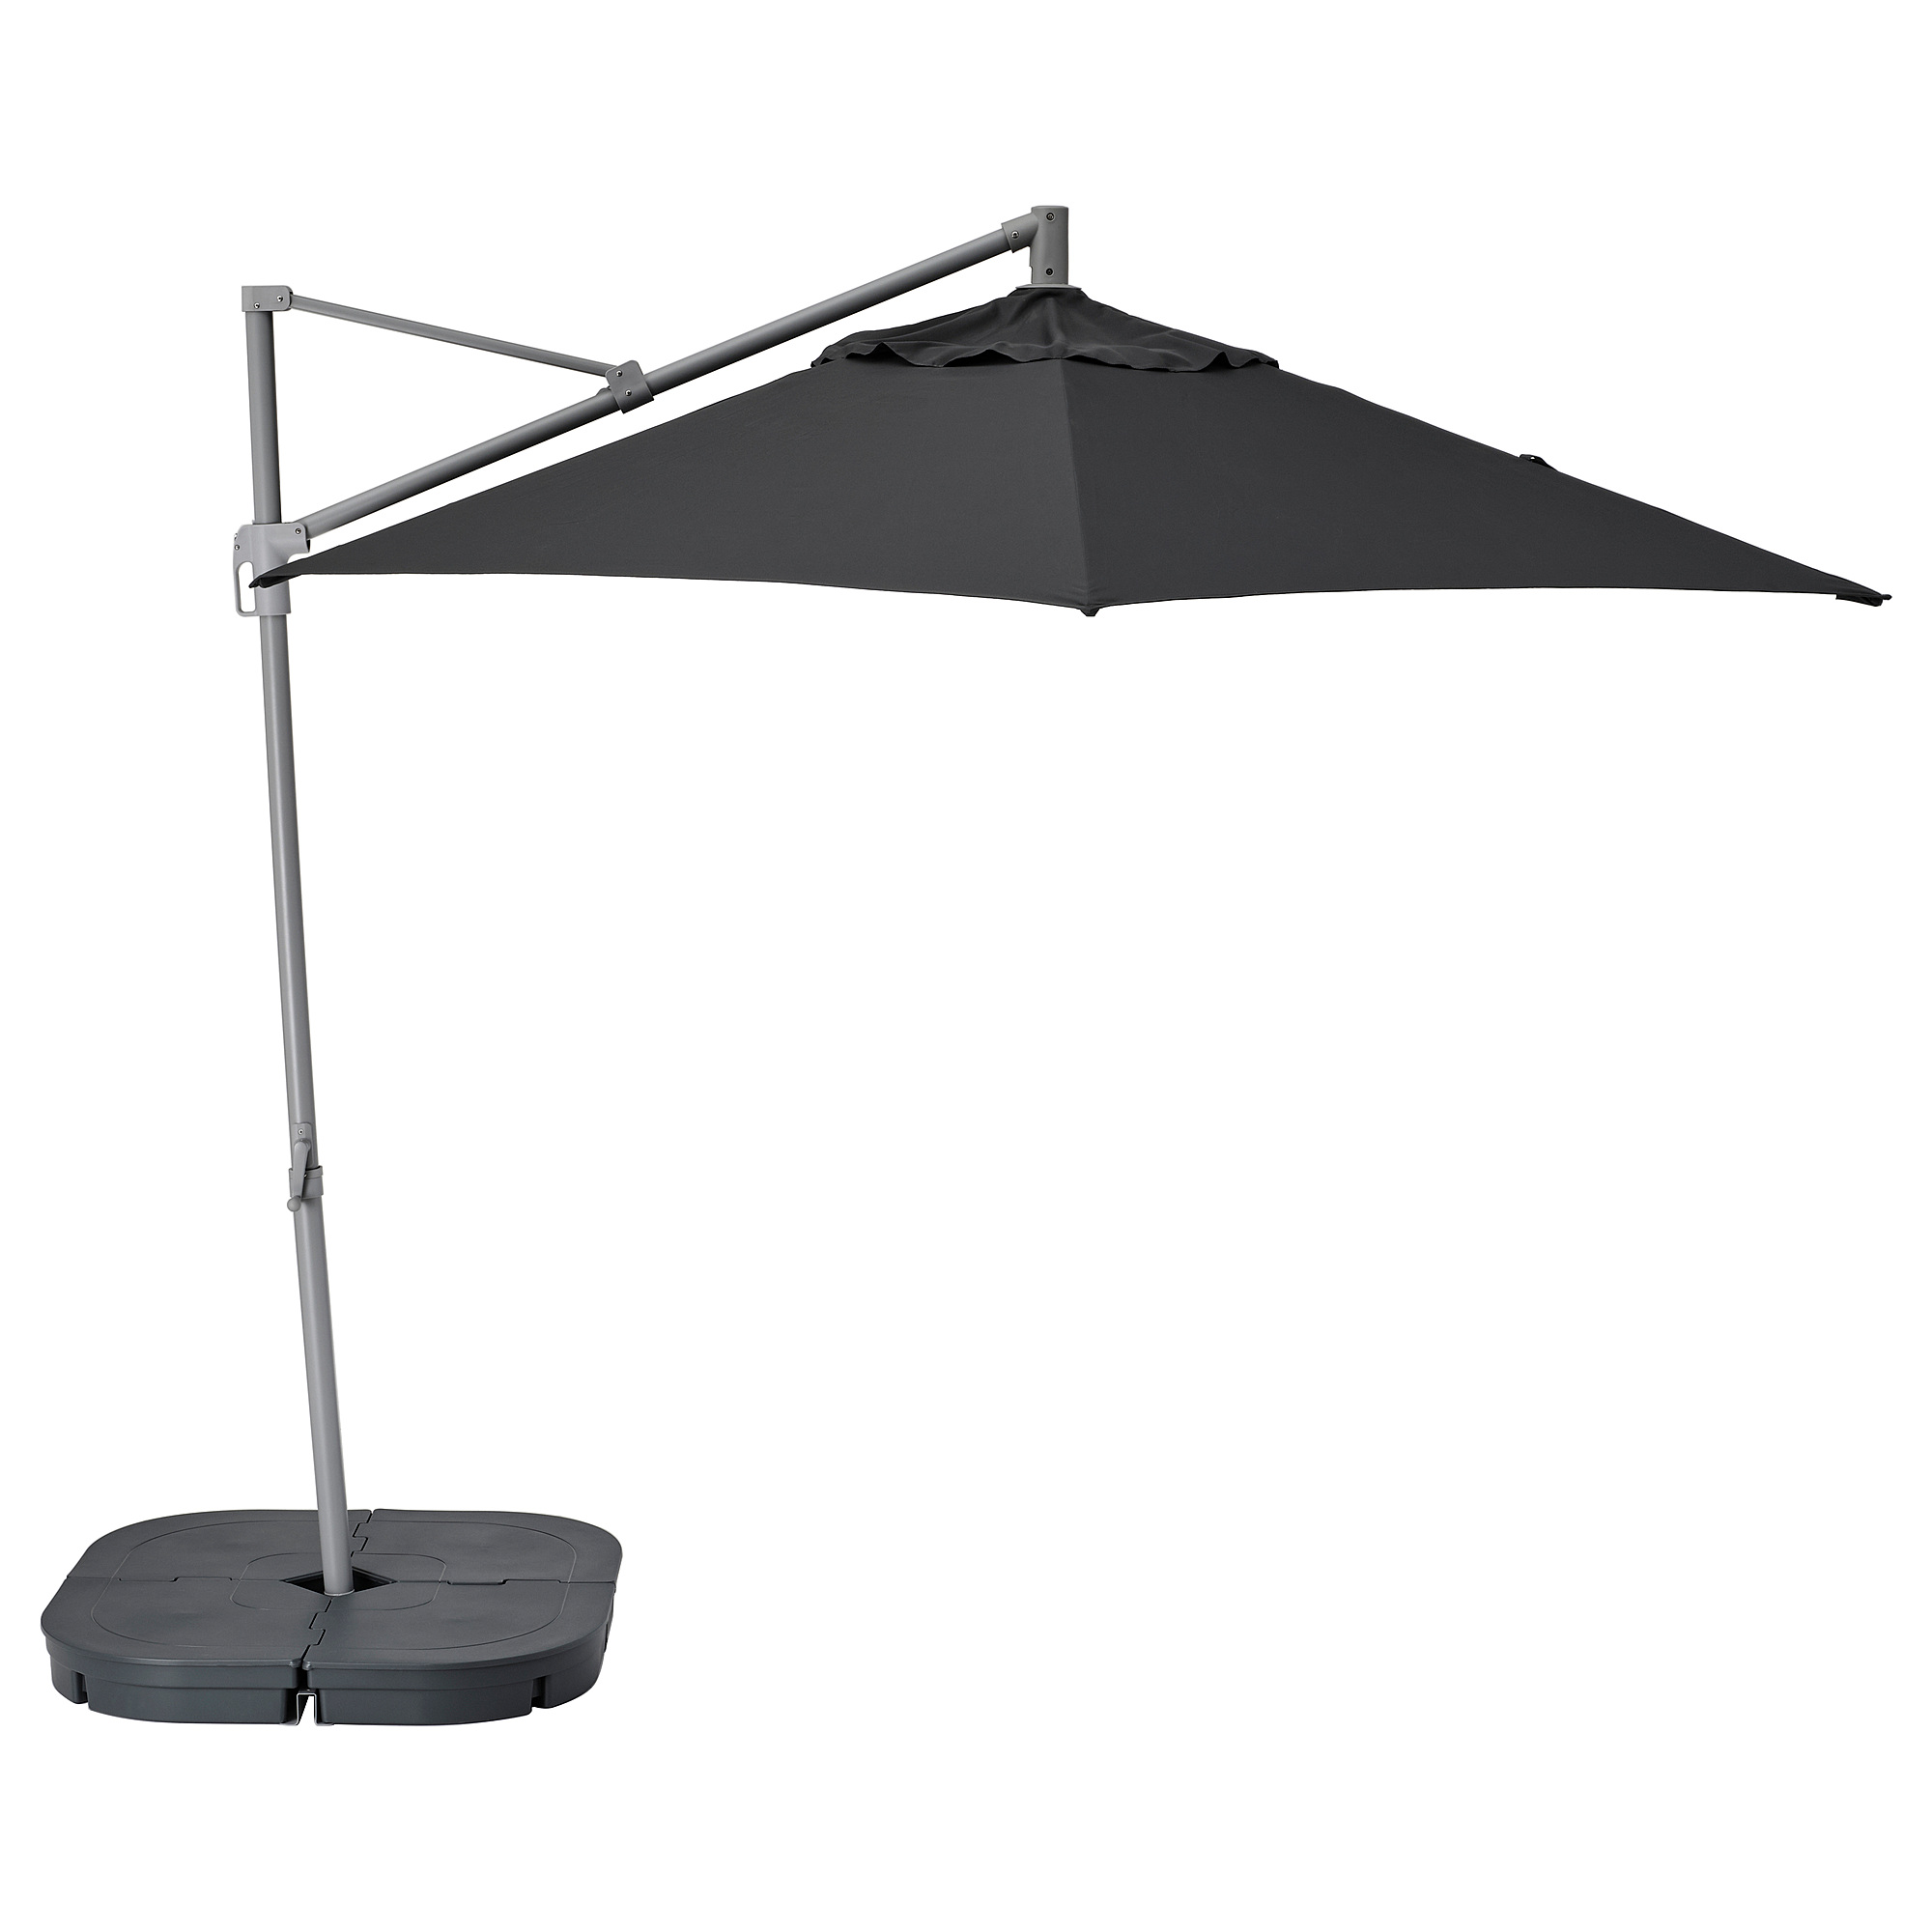 HISSÖ parasol, hanging with base